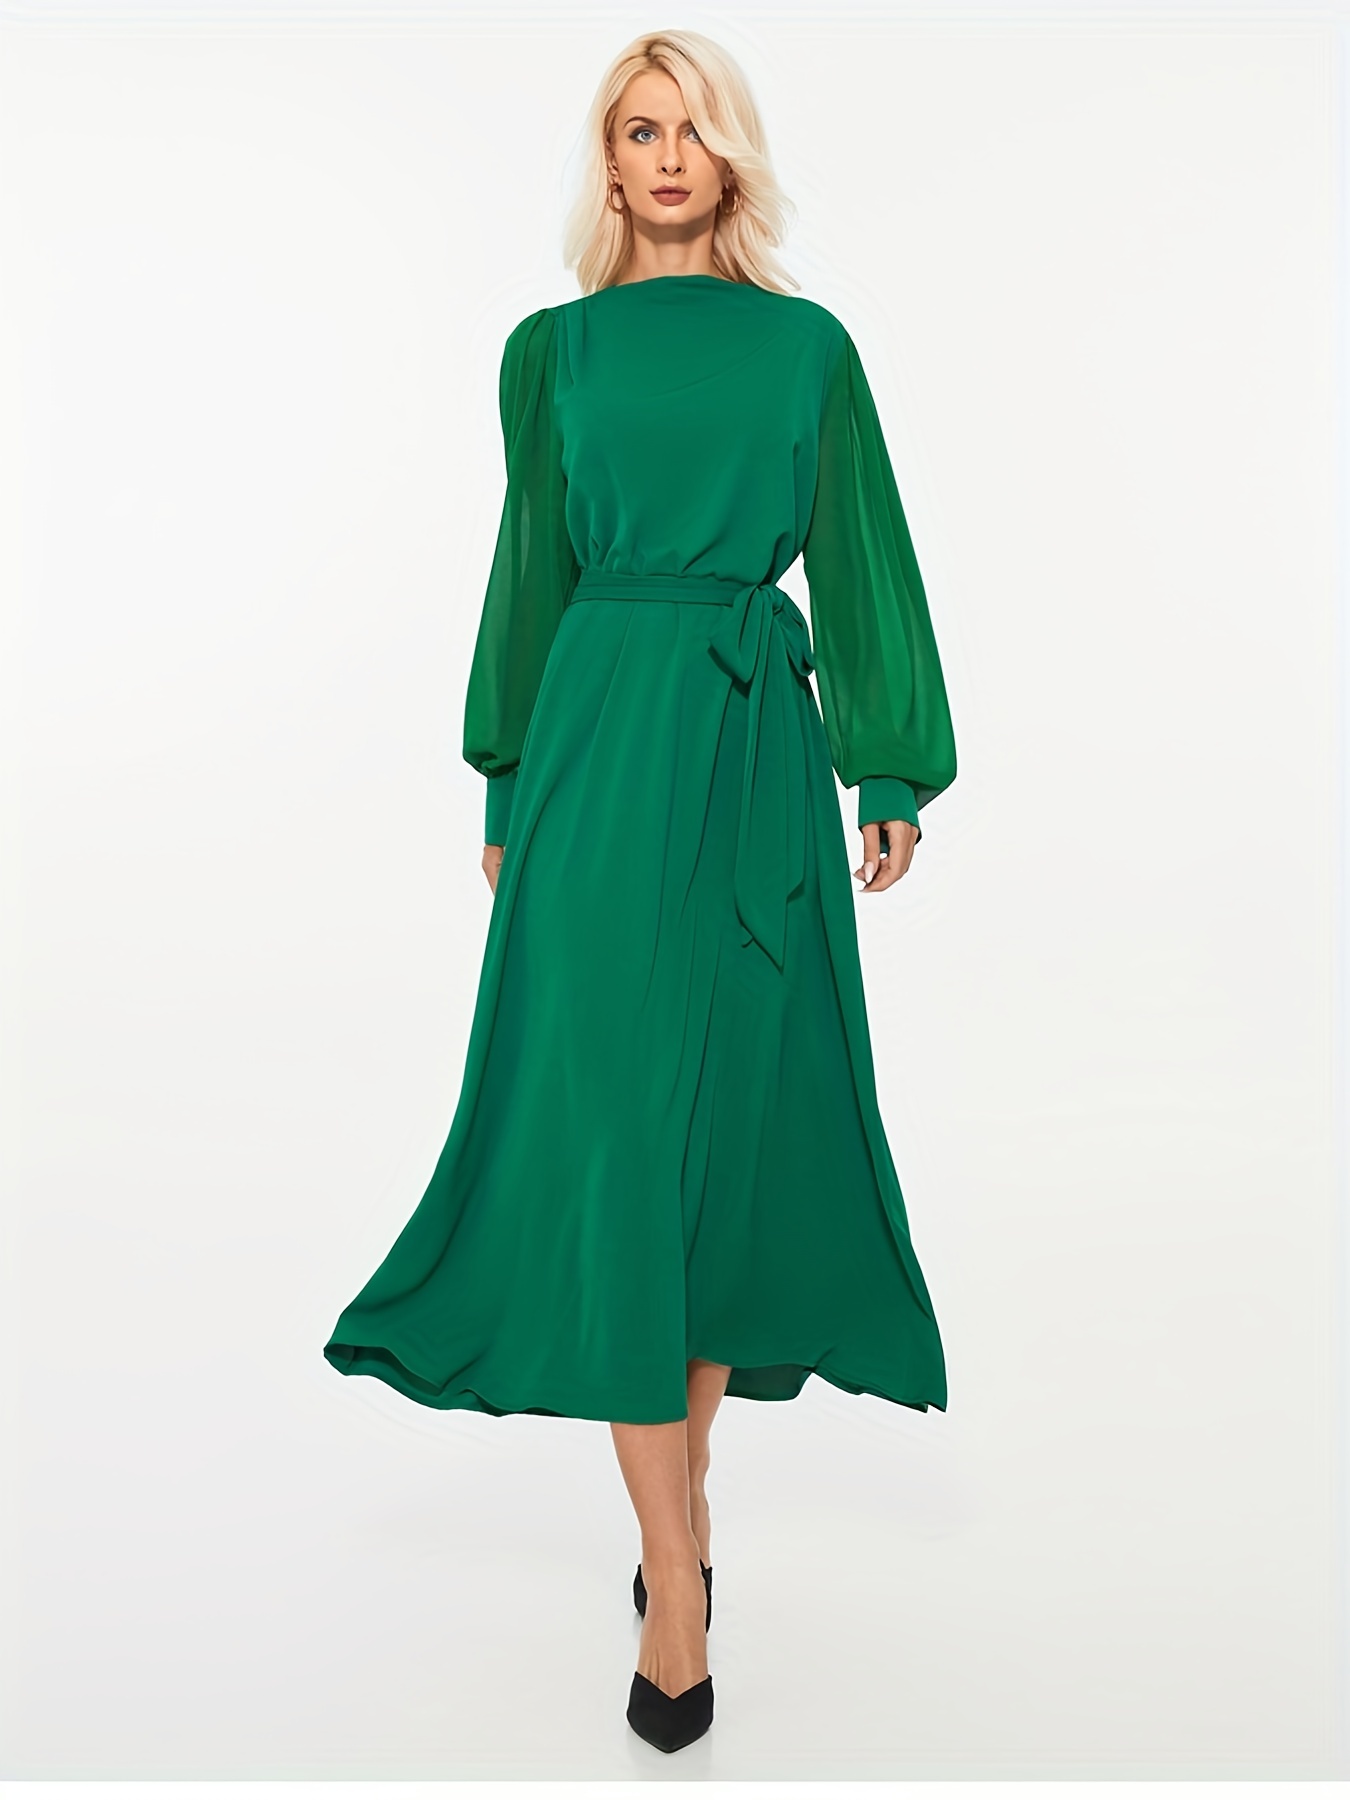 lantern long sleeve simple dress elegant mock neck midi dress womens clothing